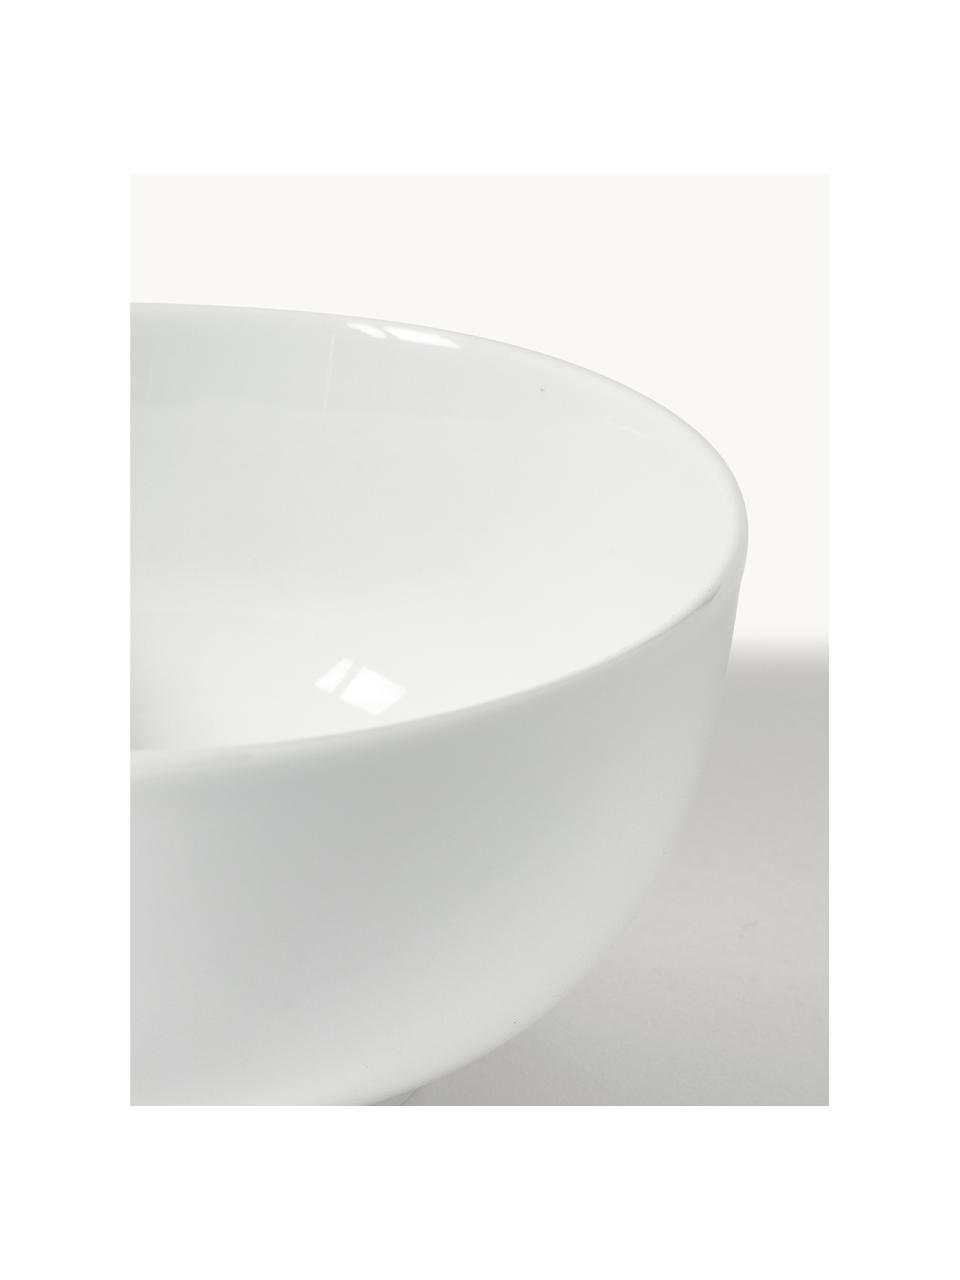 Miska z porcelany Delight, 4 szt., Porcelana, Biały, Ø 14 x W 7 cm